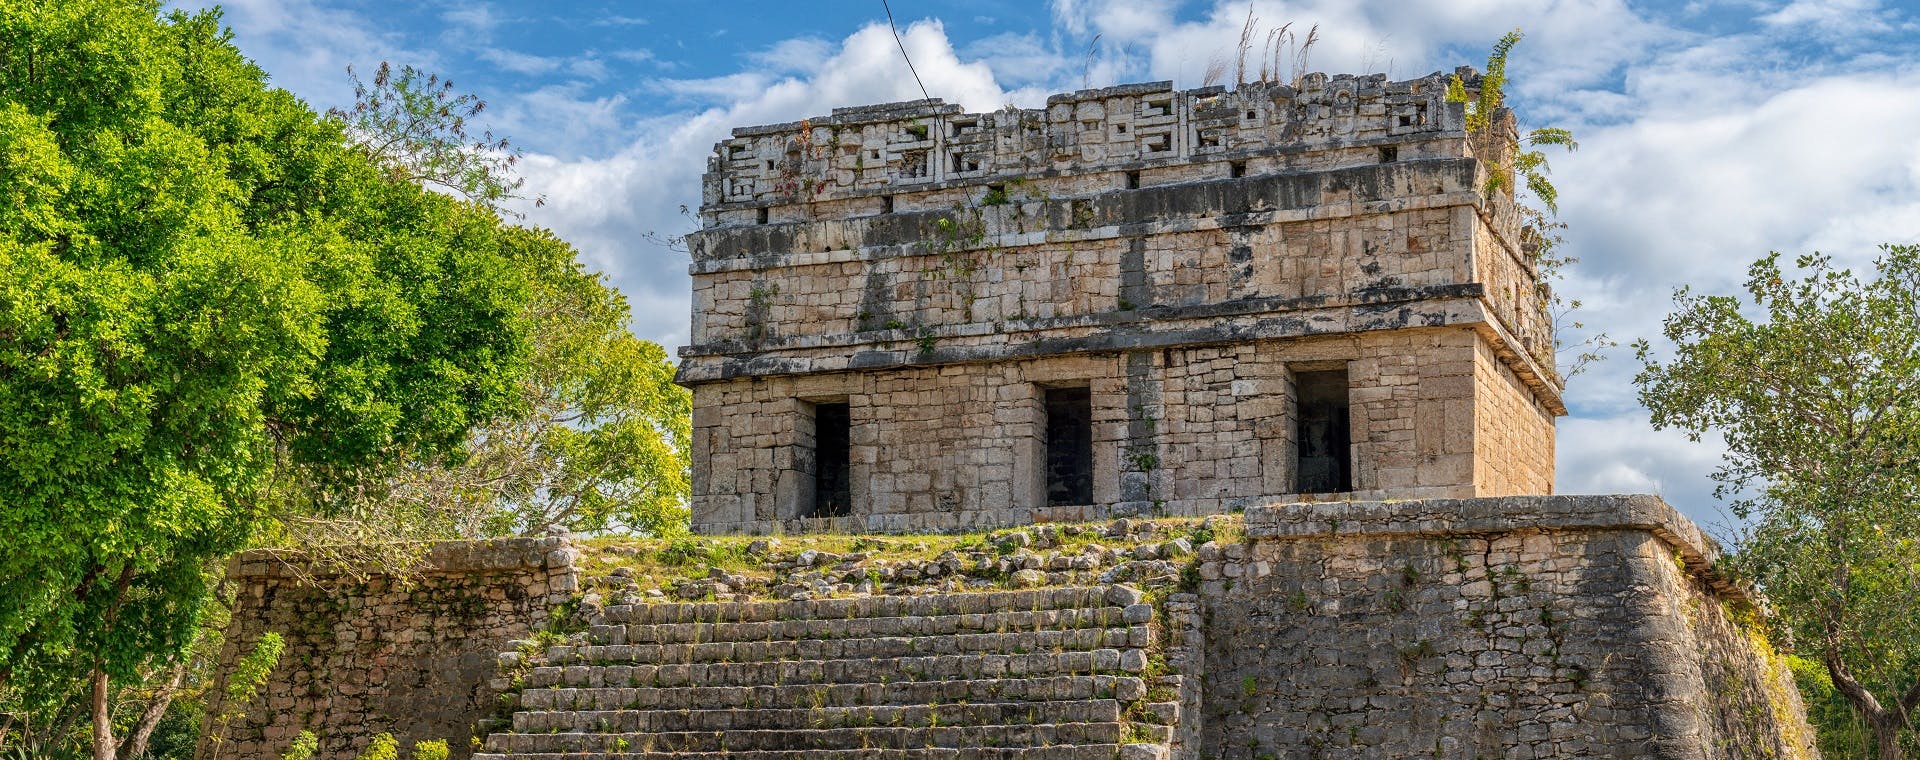 Chichén Itzá world wonder discovery guided tour Musement